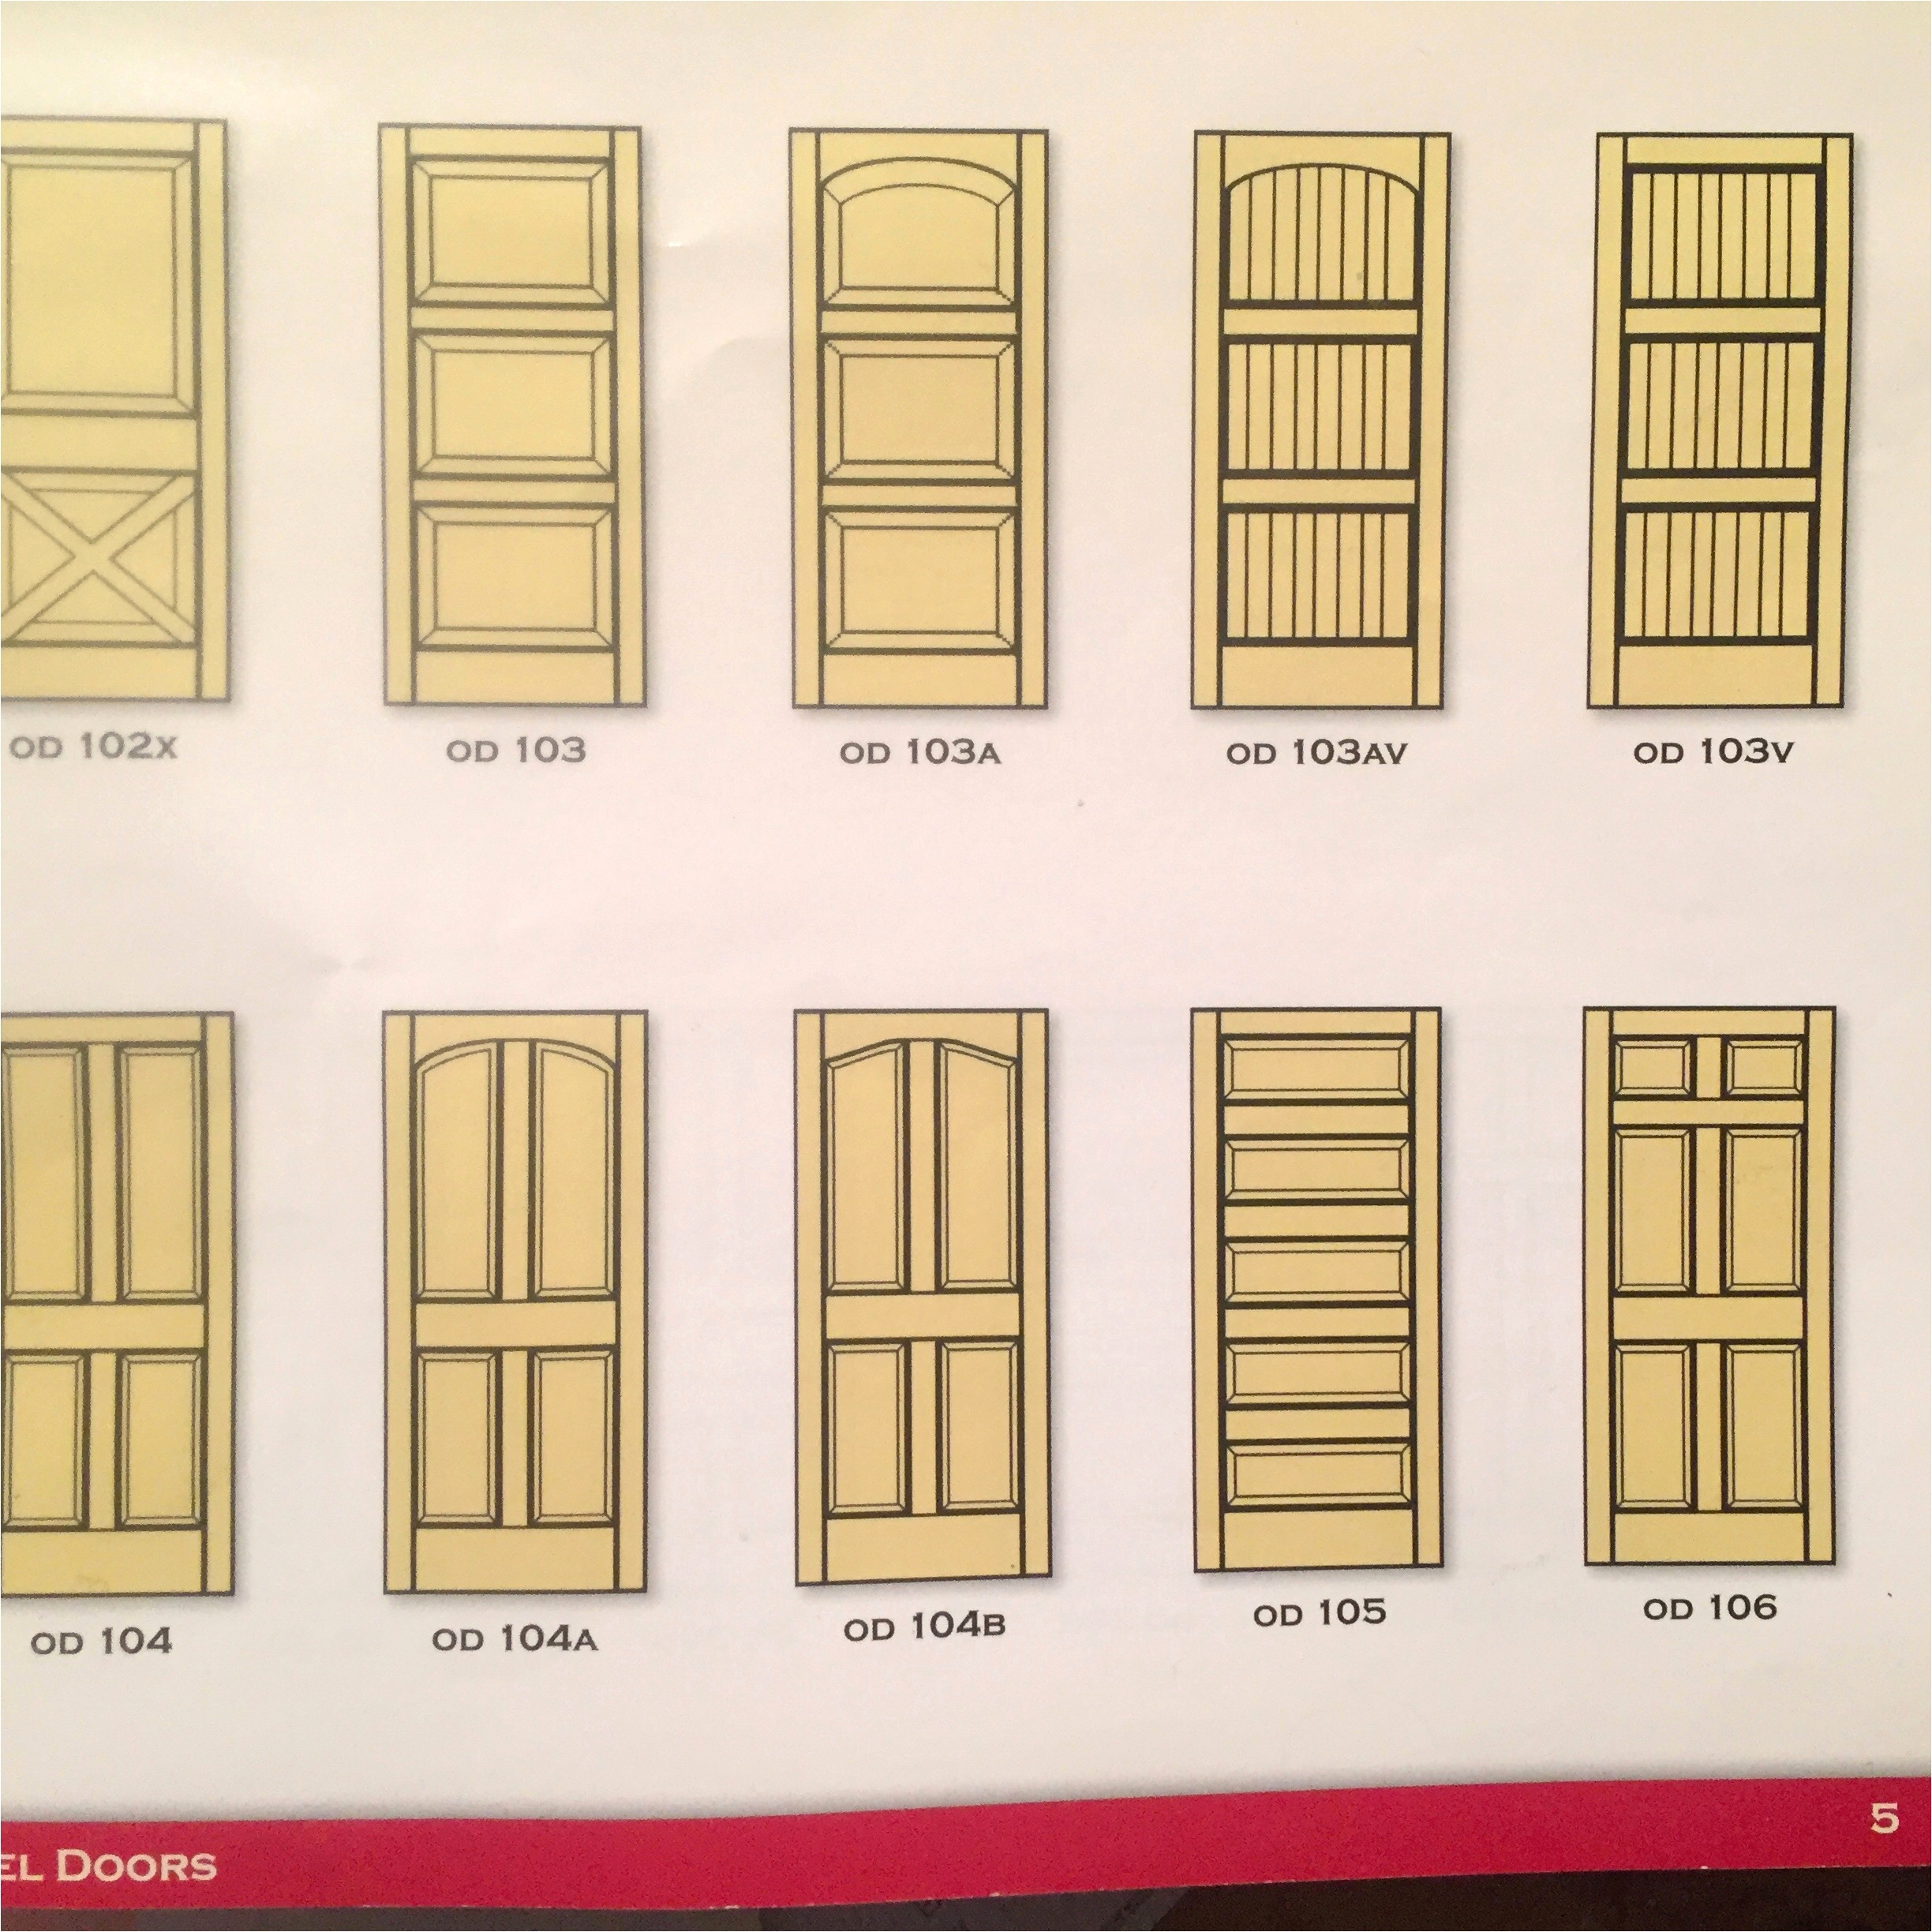 amish custom doors mills doors to customers design specifications dimensions slab doors or prehung 50 awesome menards prehung interior